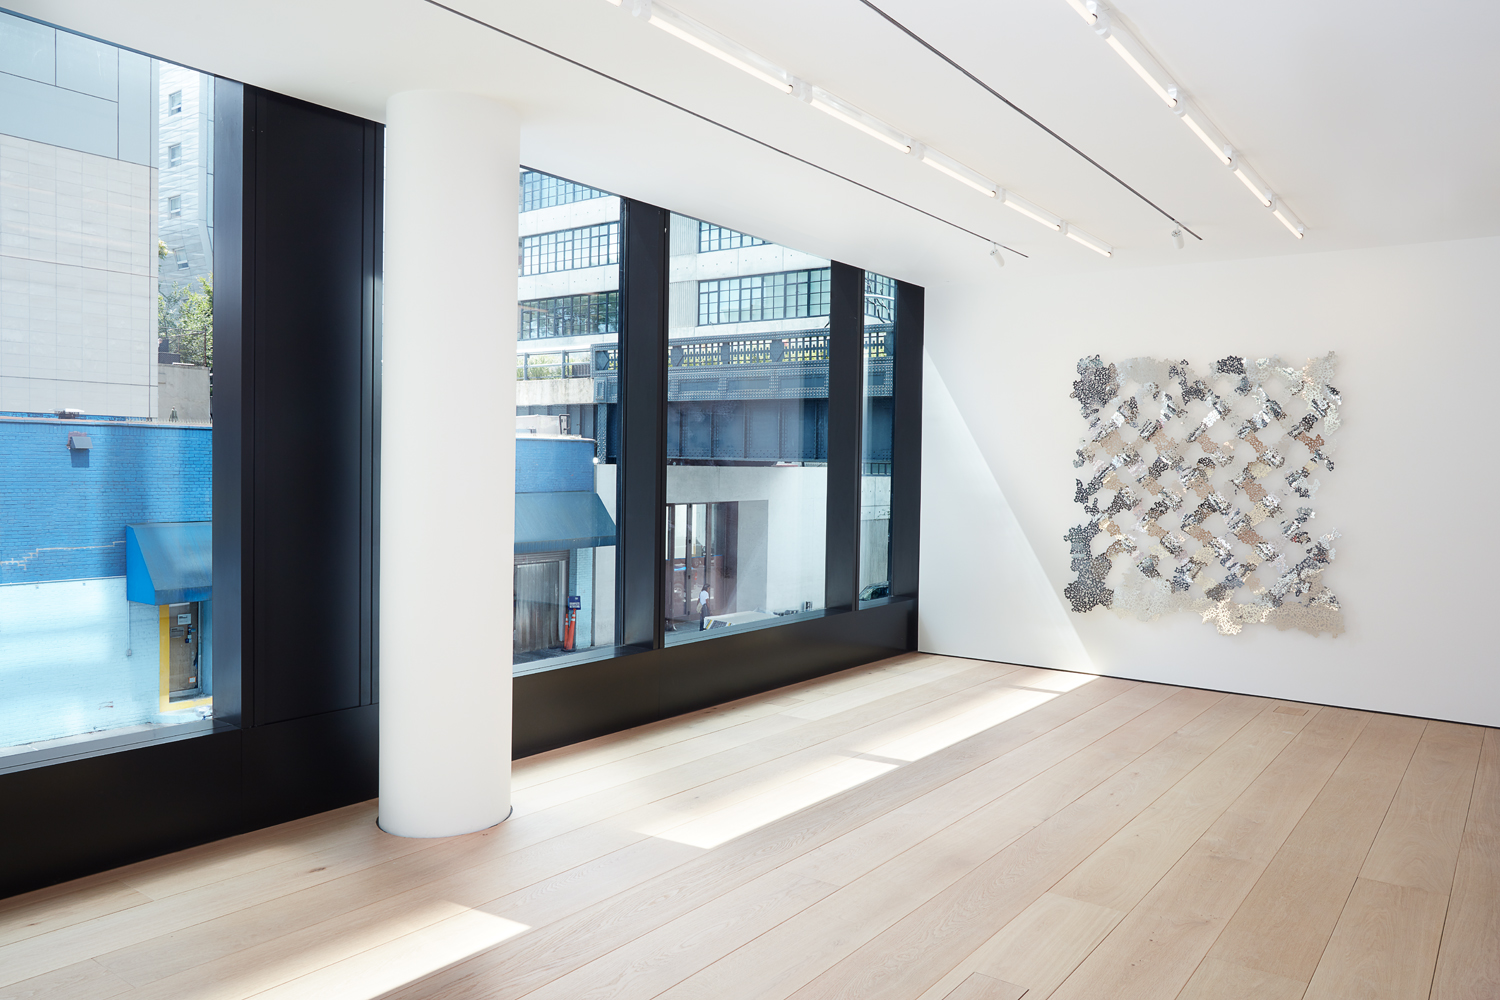 We Go Inside Peter Marino's Art-Filled Manhattan Office